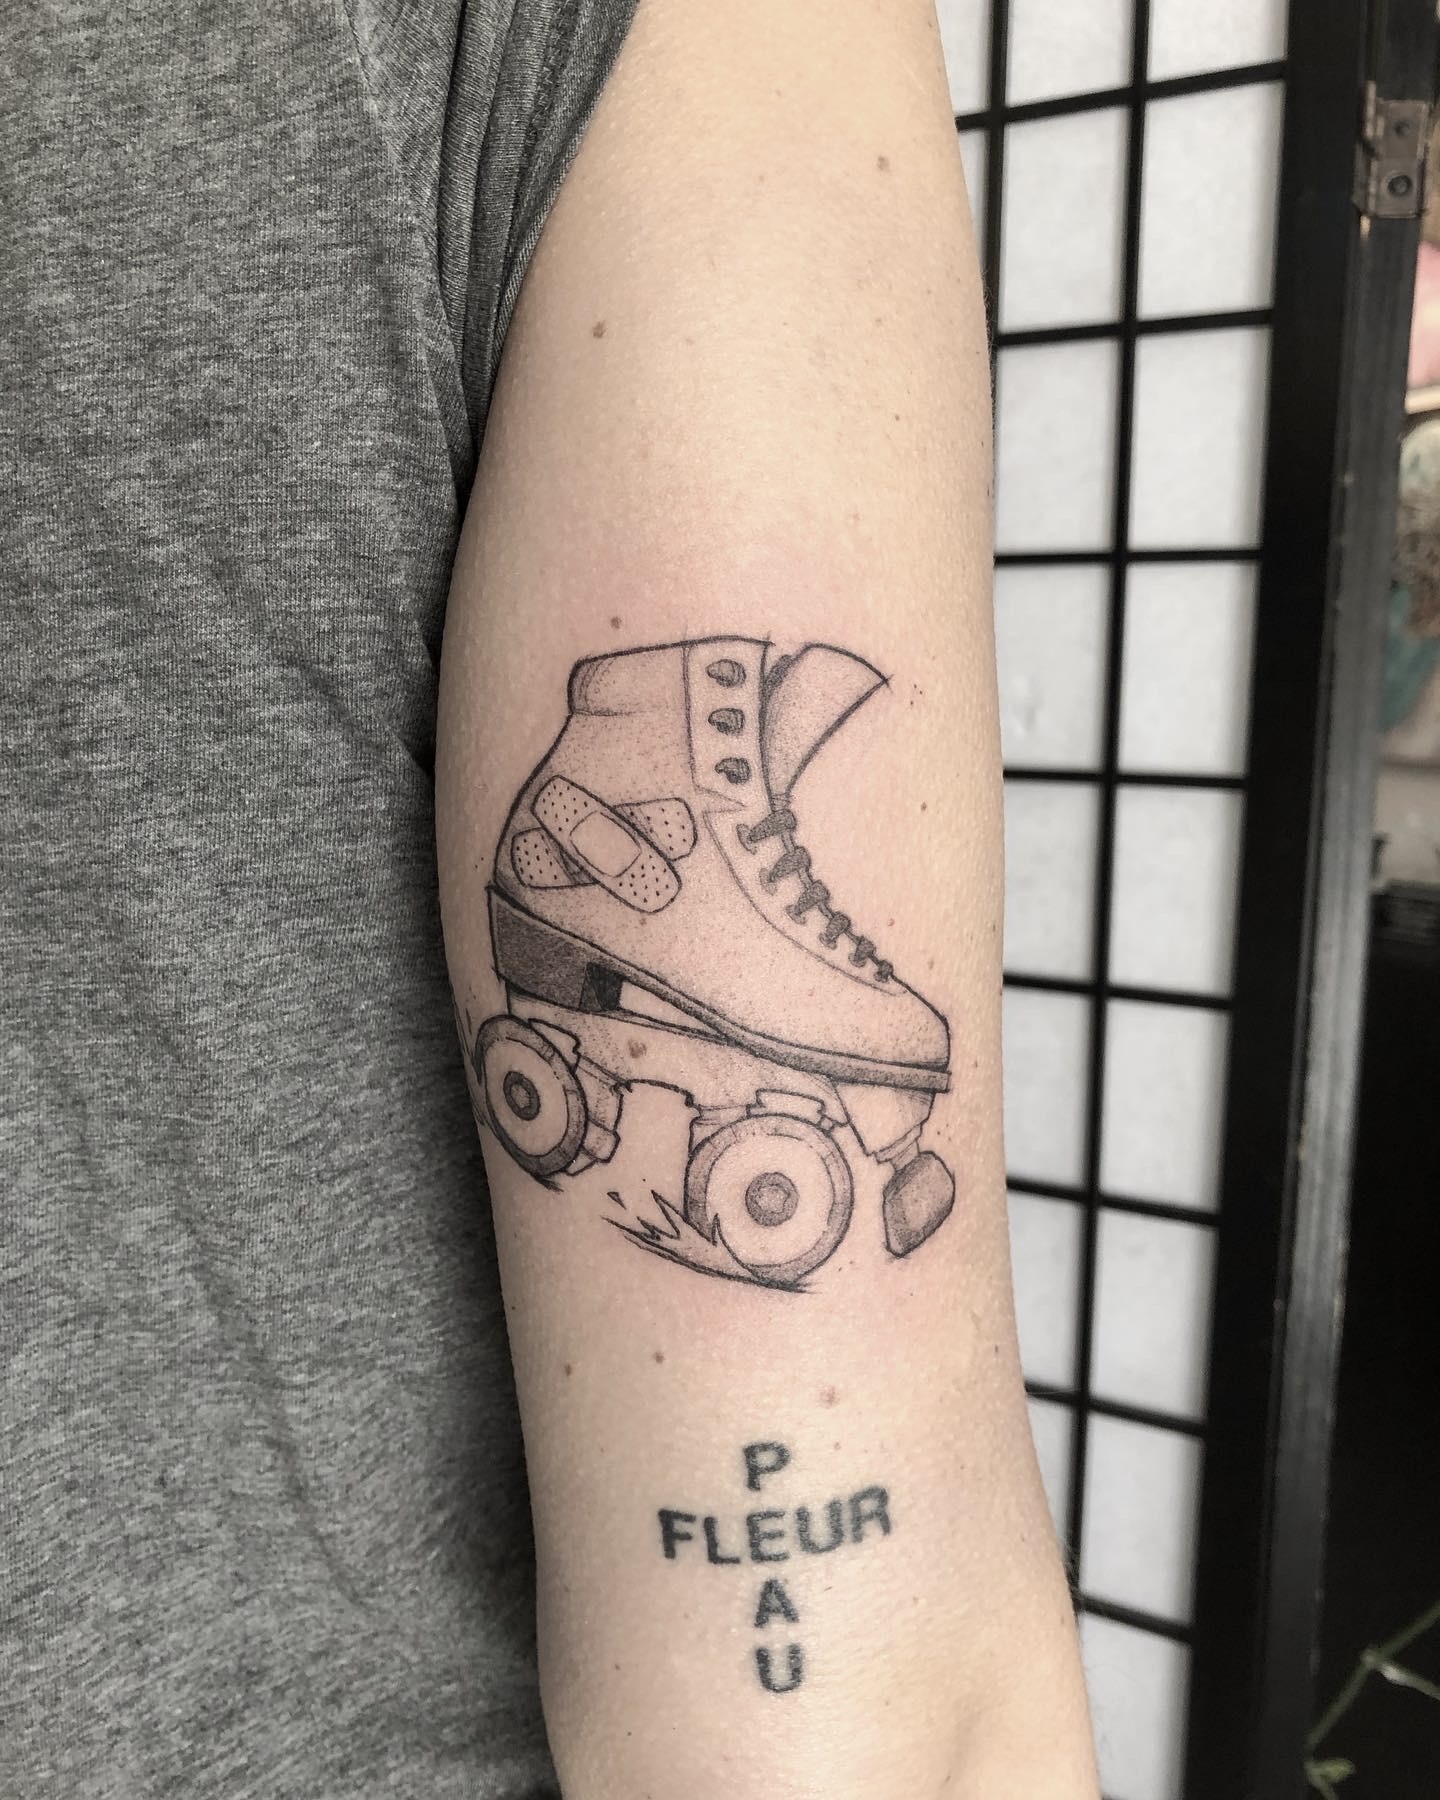 Fine line style roller skater tattoo on the back